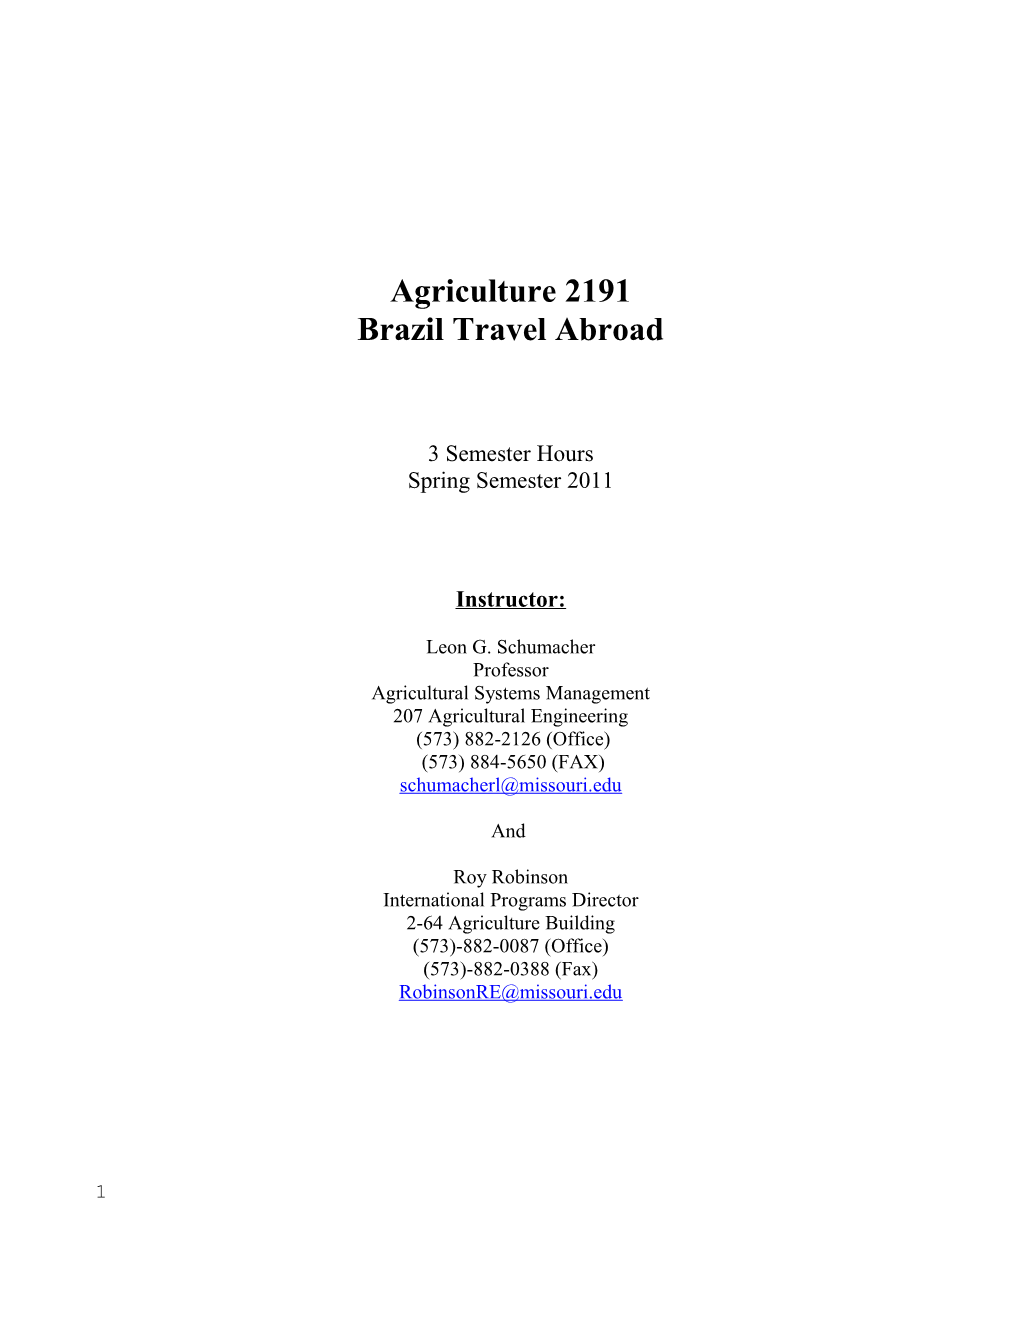 Brazil Travel Abroad